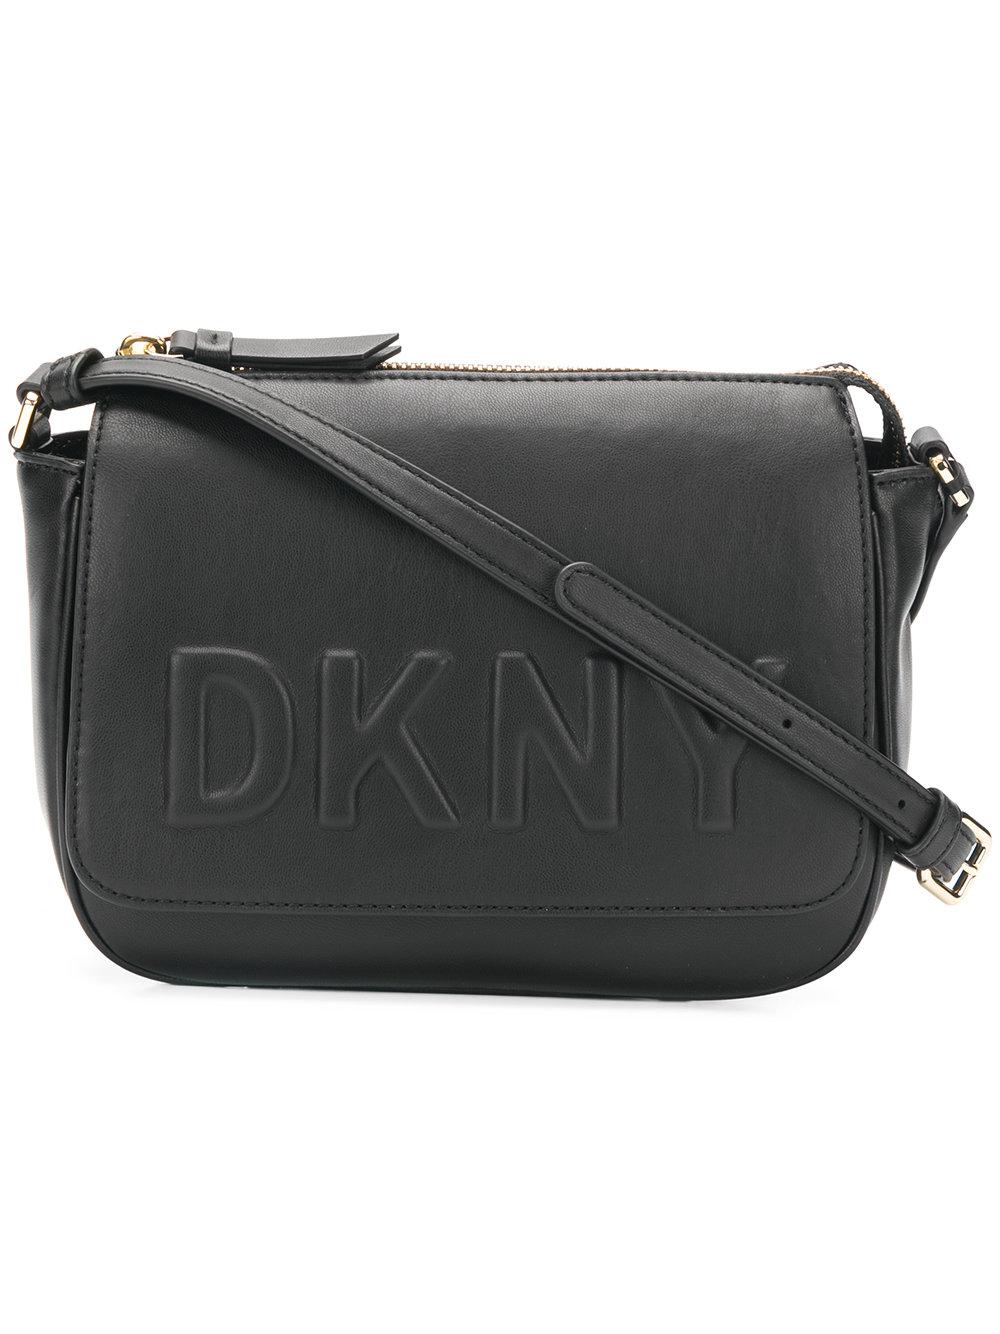 DKNY Tilly Crossbody Bag With Logo in Black | Lyst